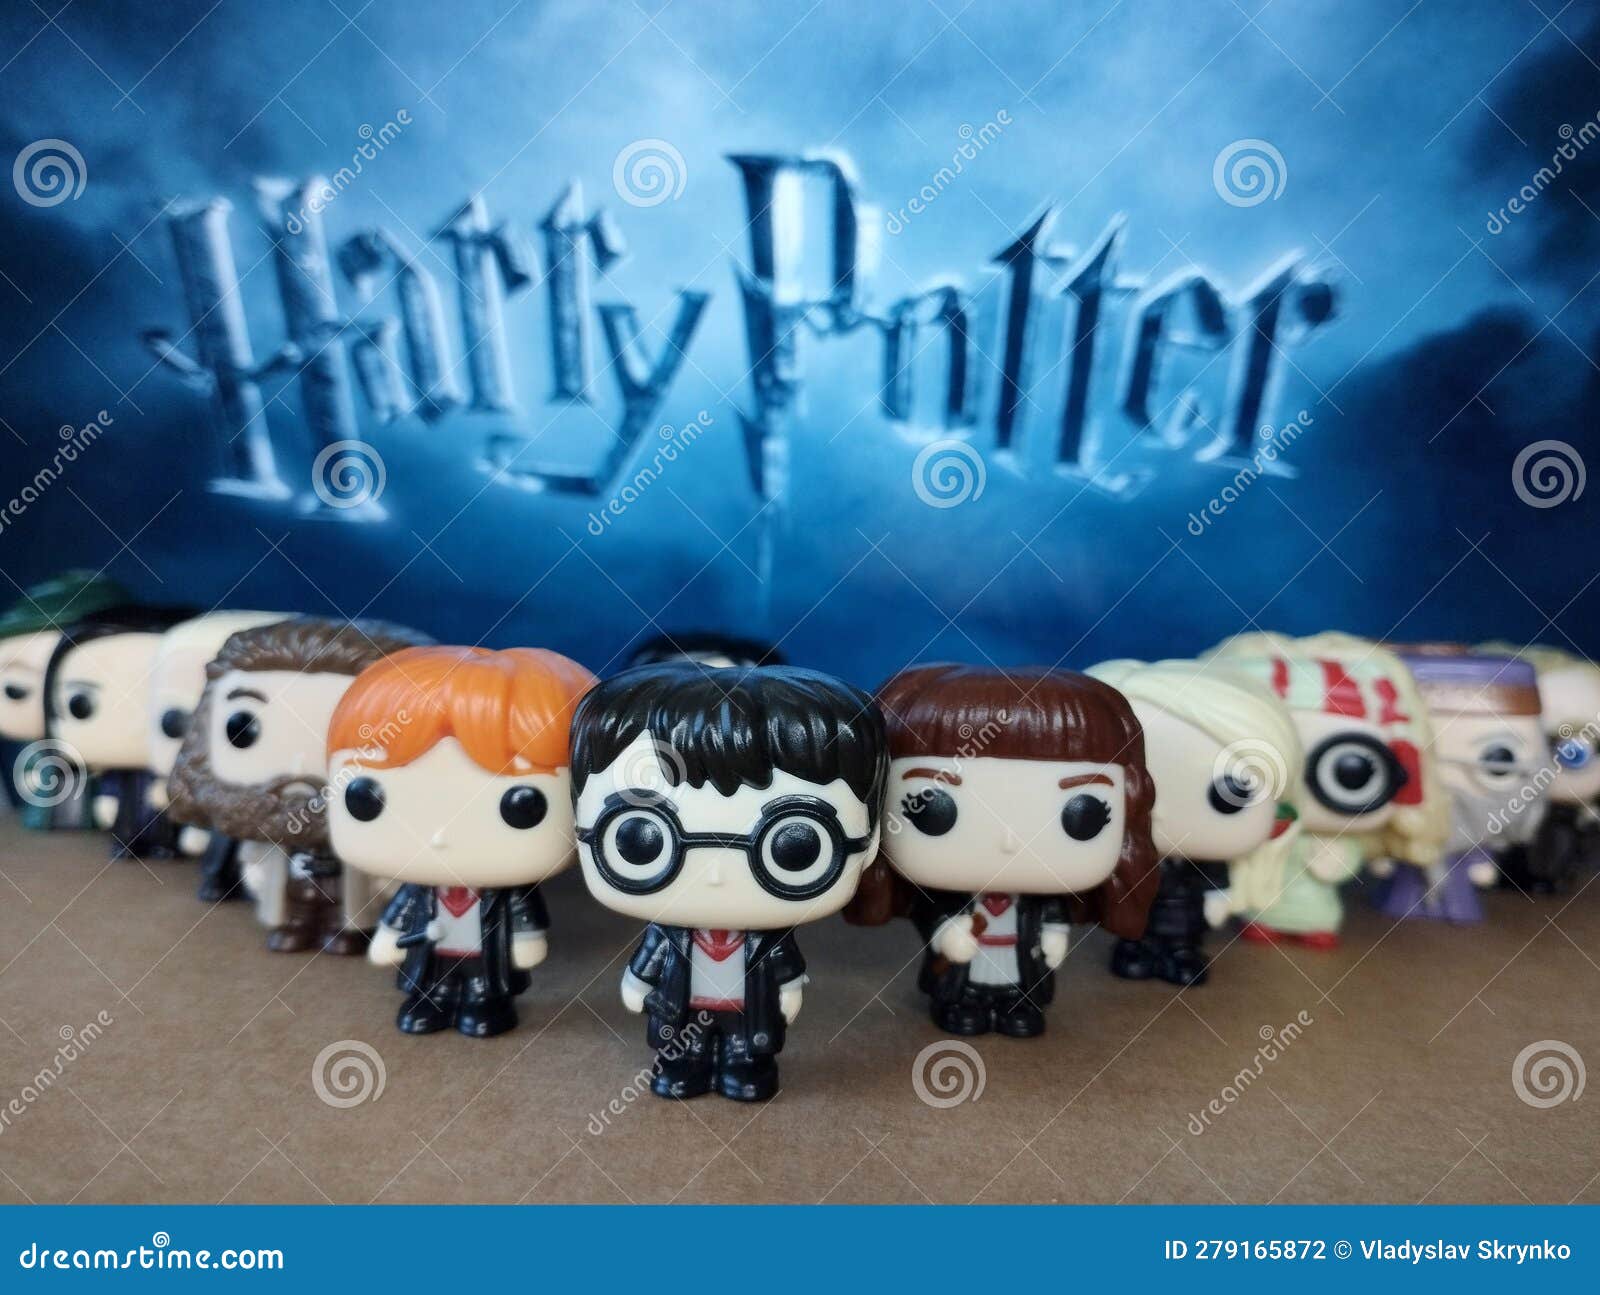 Hermione Granger figurine. Funko Kinder Joy Harry Potter toy